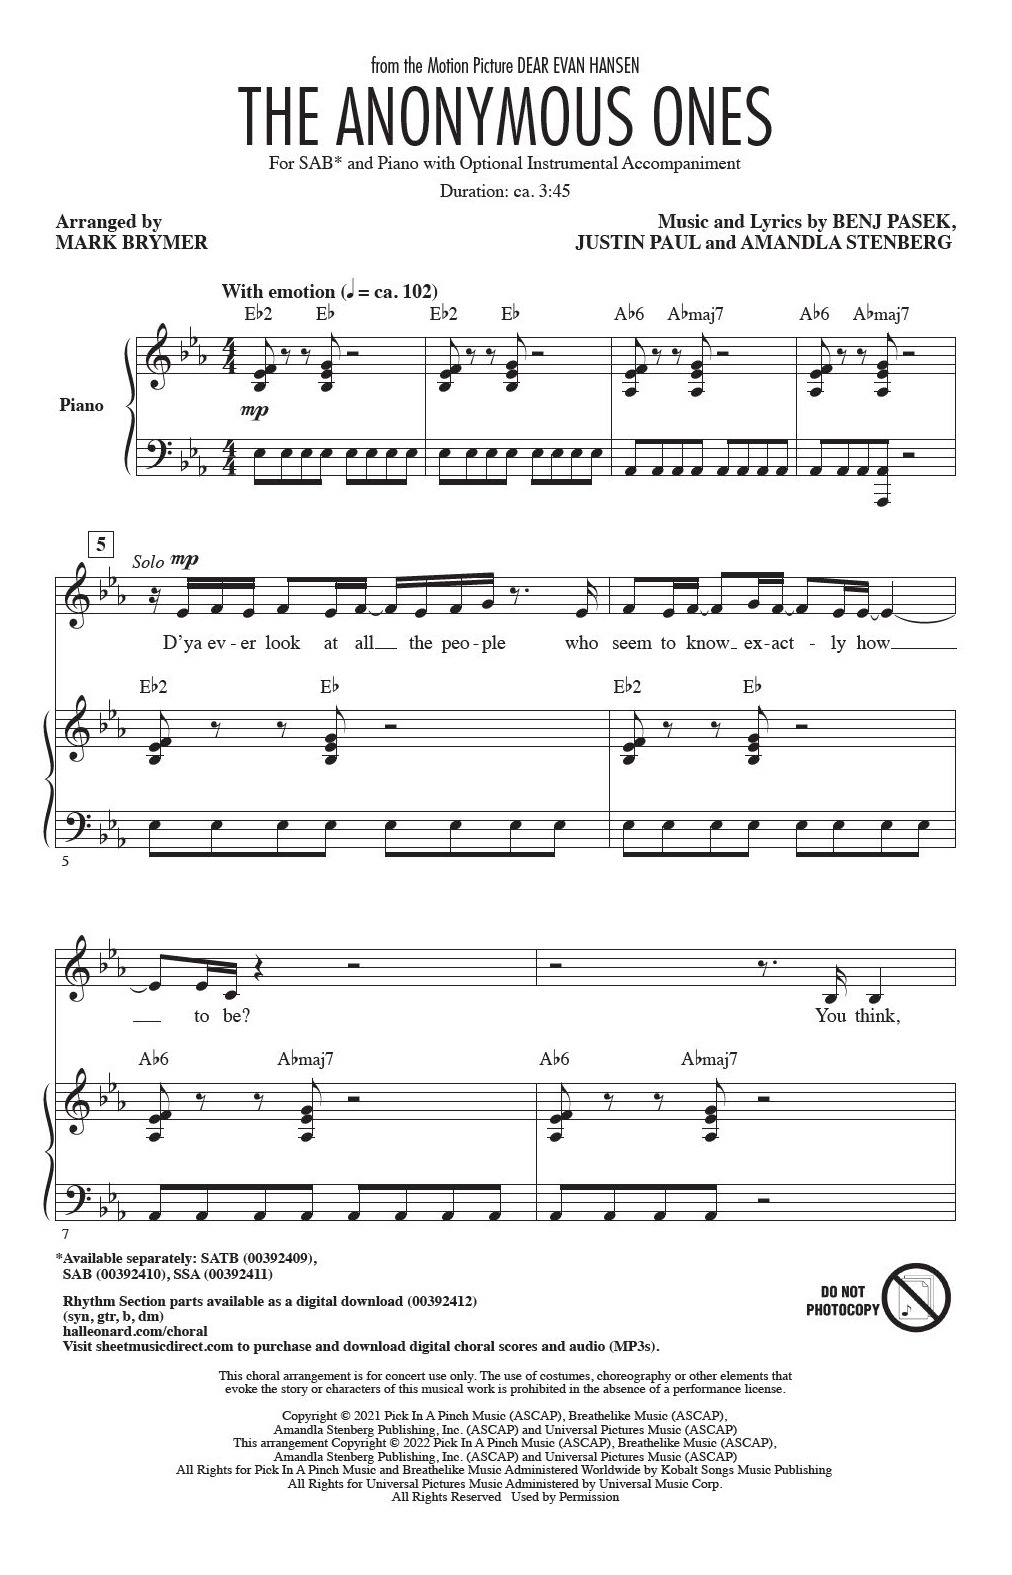 Benj Pasek, Justin Paul & Amandla Stenberg The Anonymous Ones (from Dear Evan Hansen) (arr. Mark Brymer) Sheet Music Notes & Chords for SSA Choir - Download or Print PDF